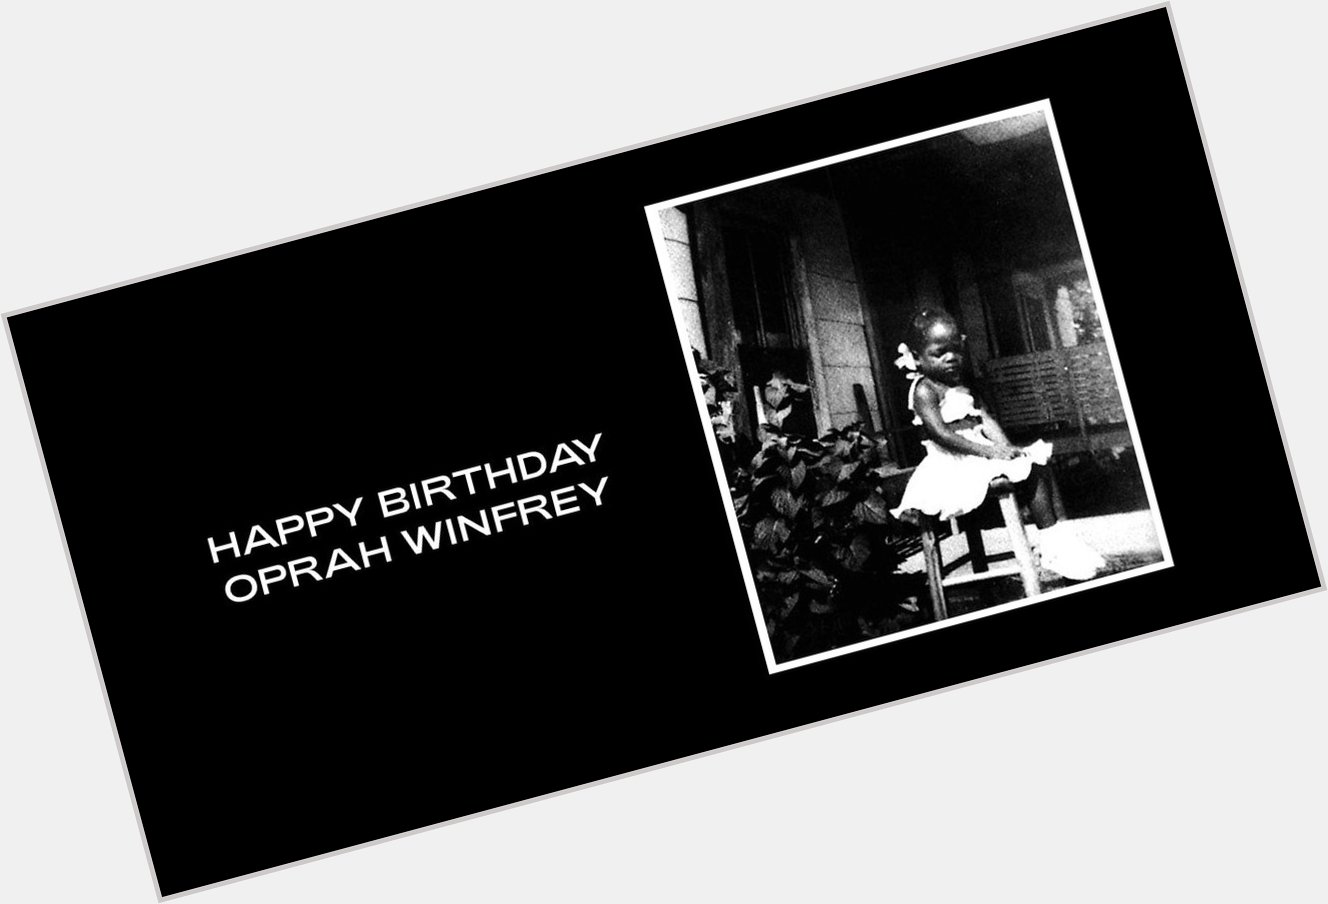  Happy Birthday Oprah Winfrey  